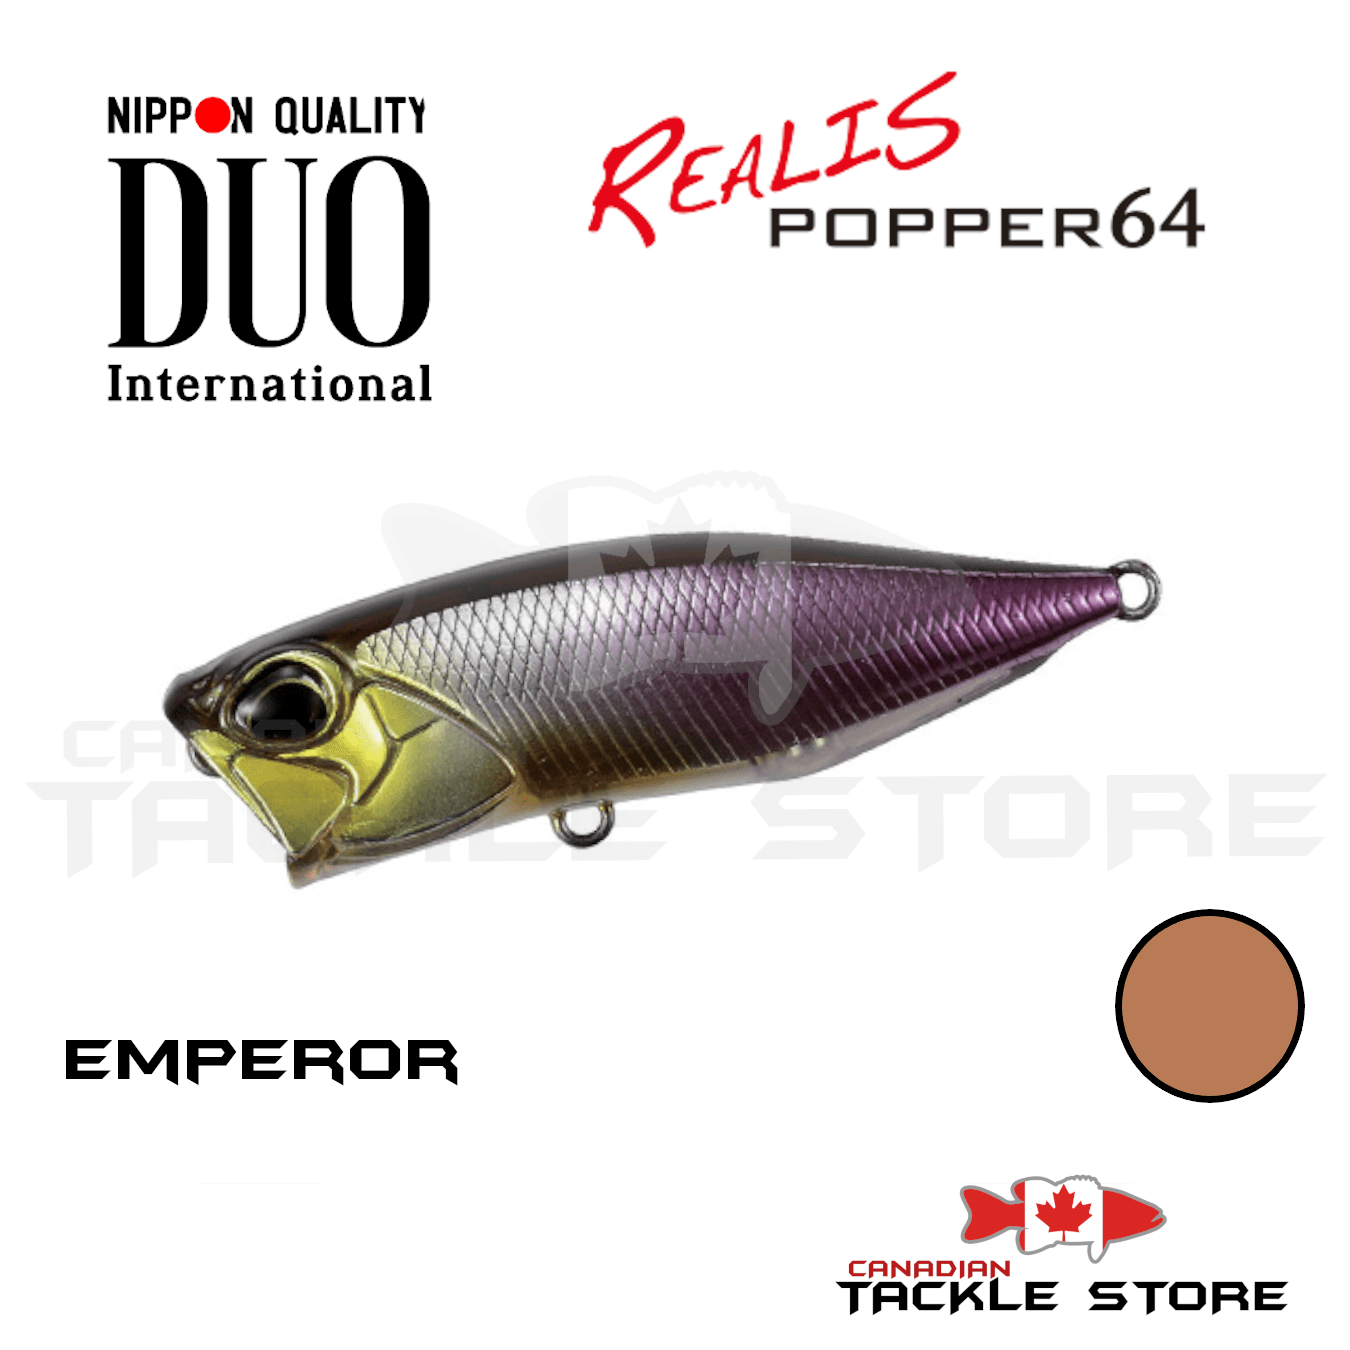 Duo Realis Popper 64